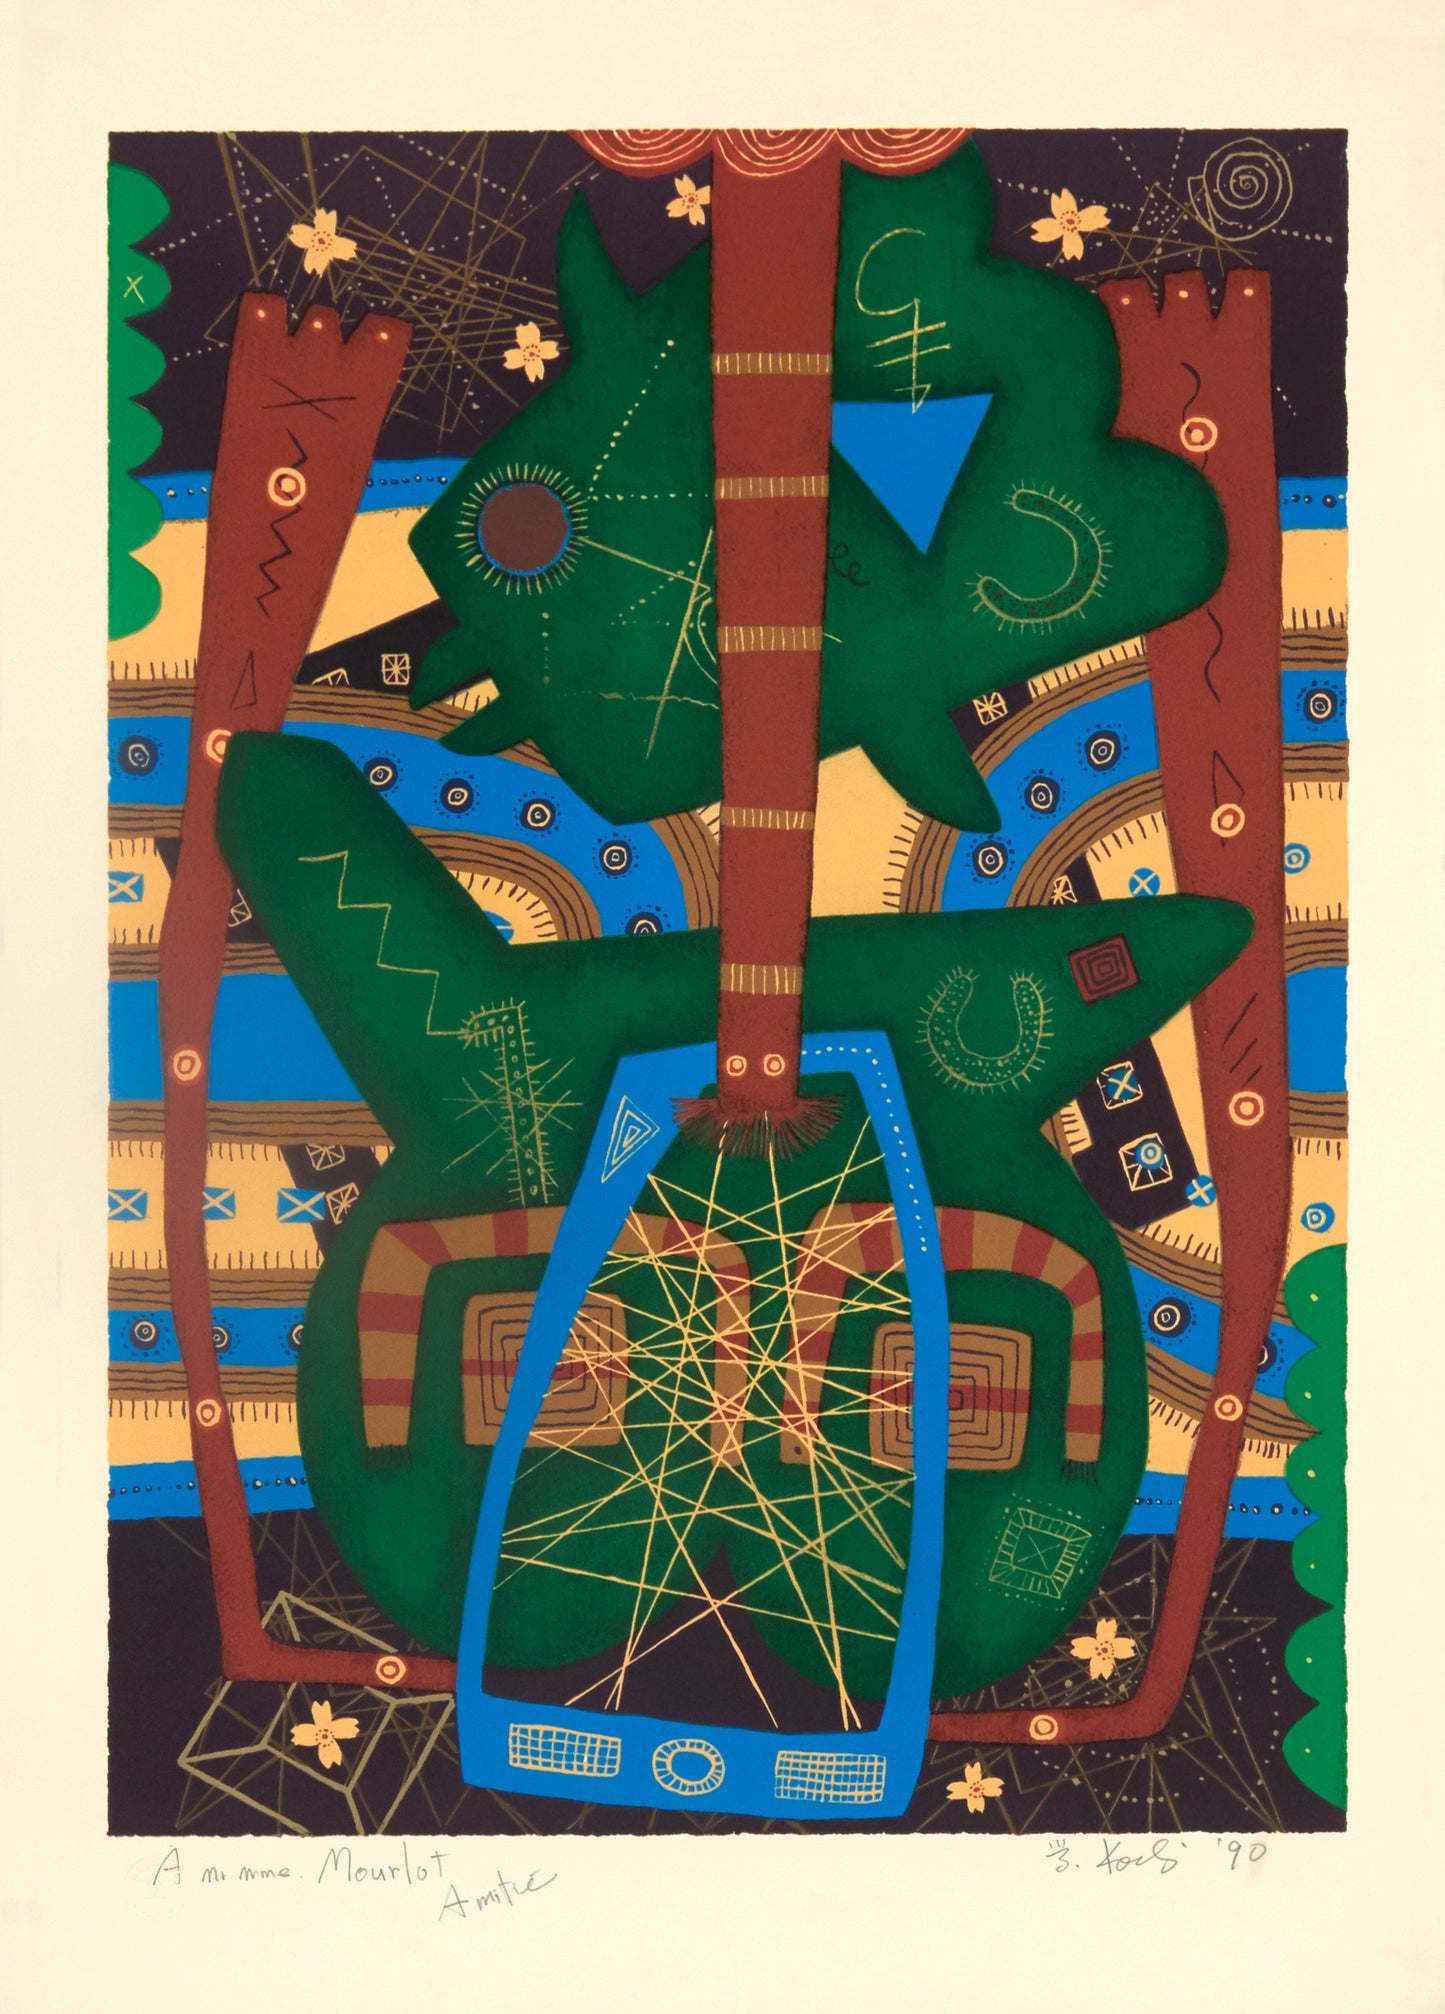 La Mangrove by Manabu Kochi - Mourlot Editions - Fine_Art - Poster - Lithograph - Wall Art - Vintage - Prints - Original